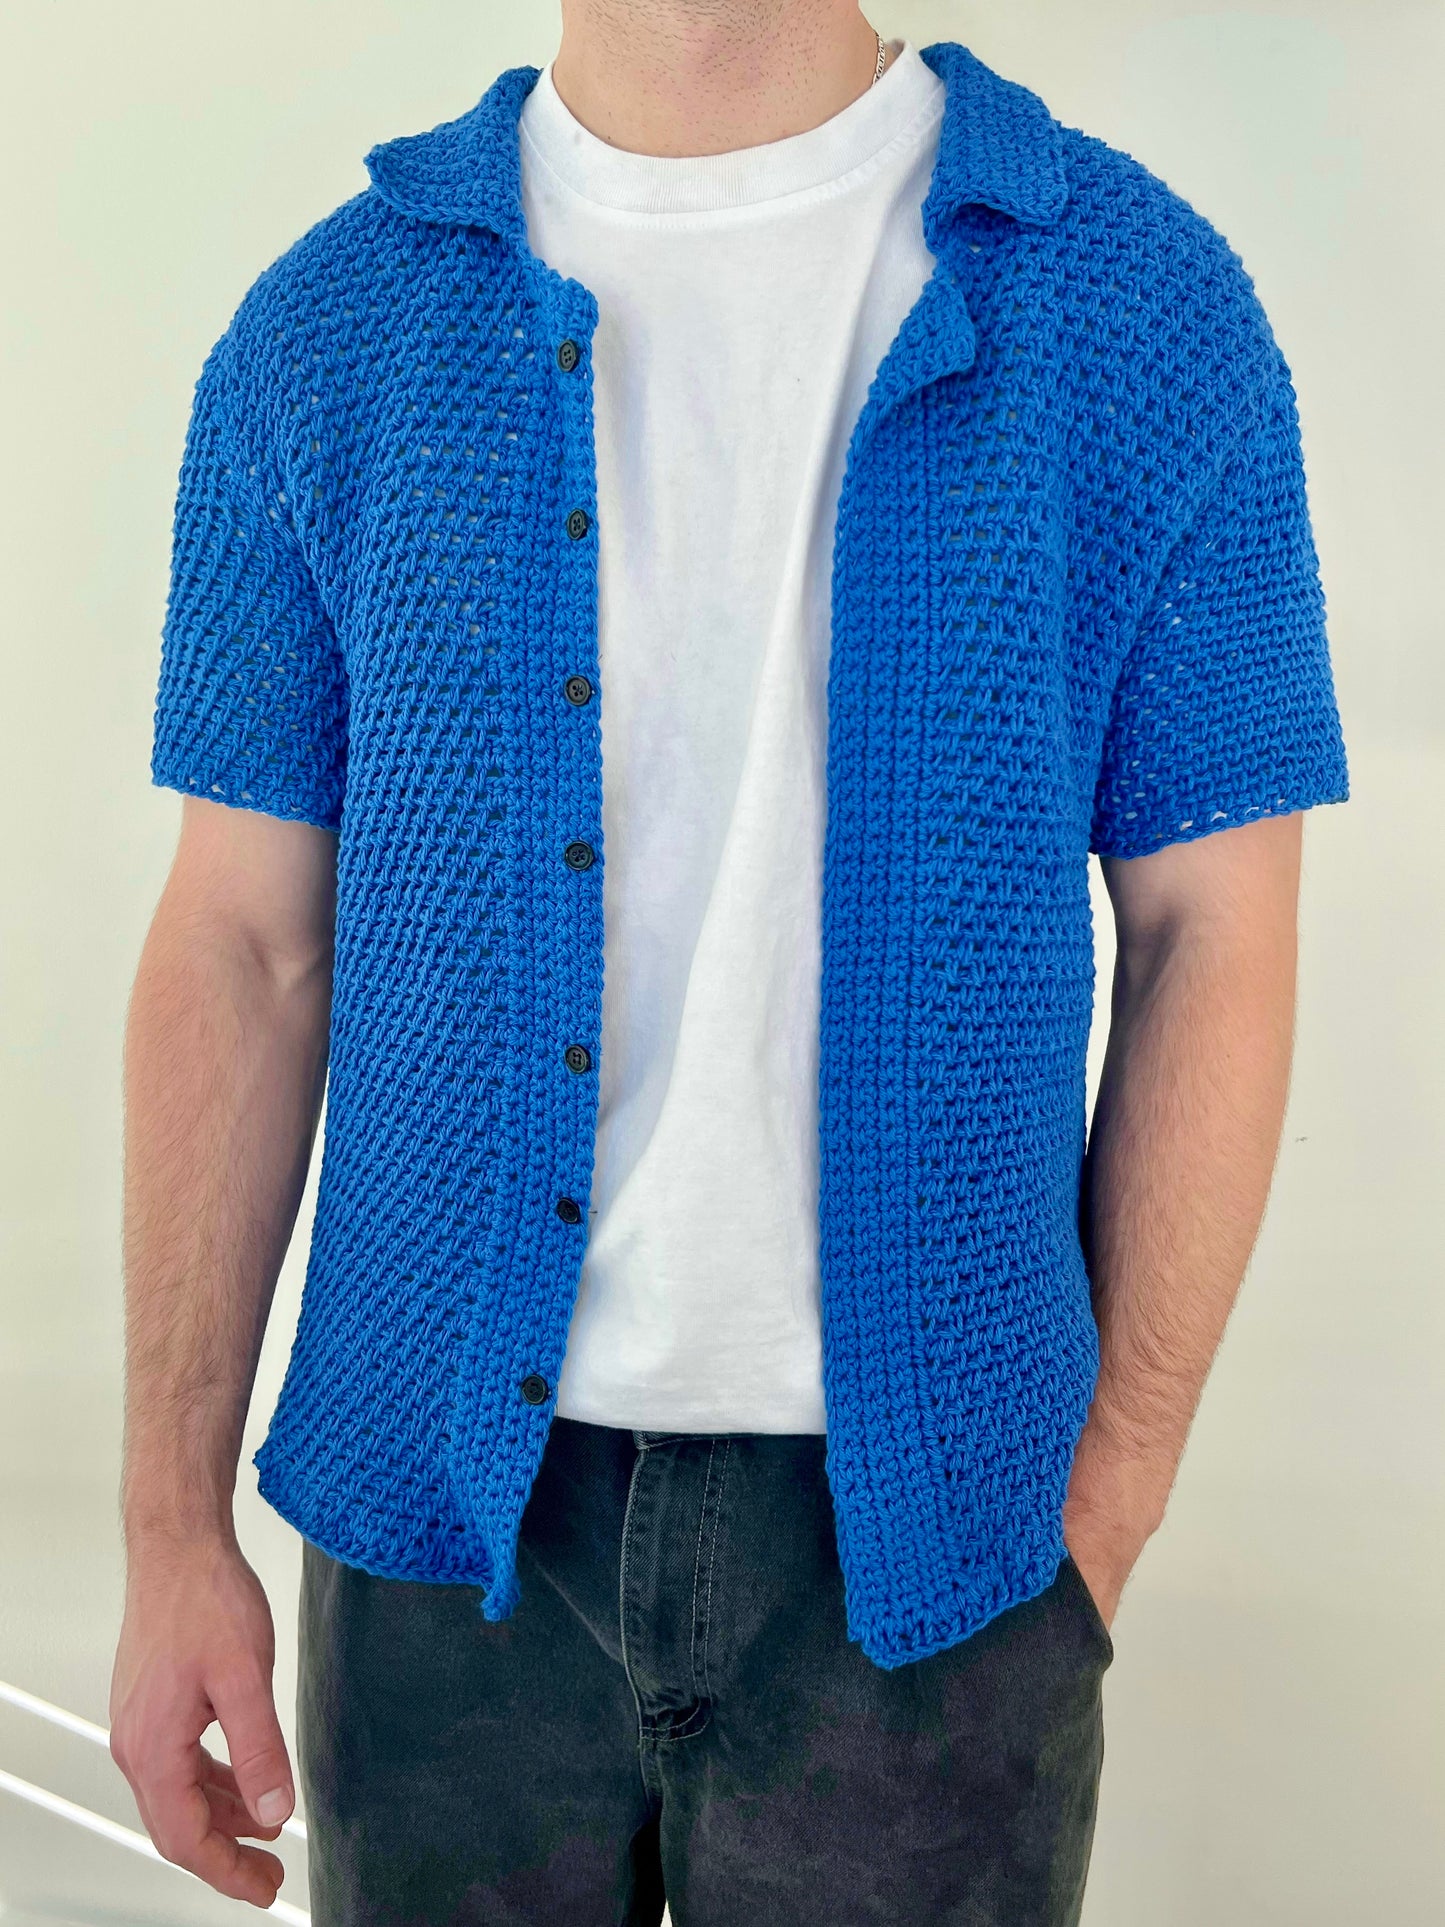 Kent Top Crochet Pattern